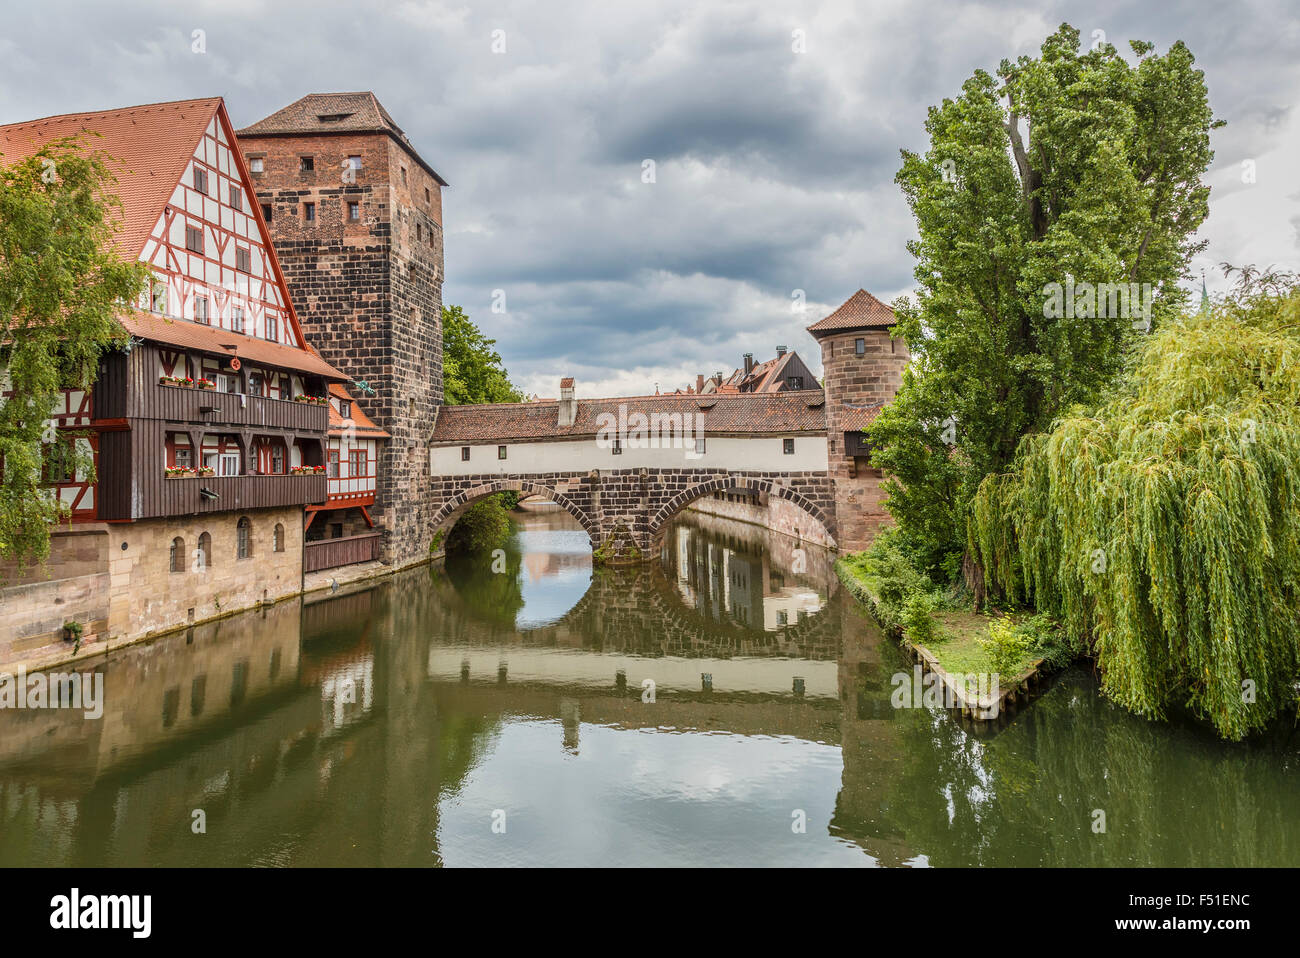 The famous Hangman's Bridge over the Pegnitz River, Nuremberg, Germany. Stock Photo